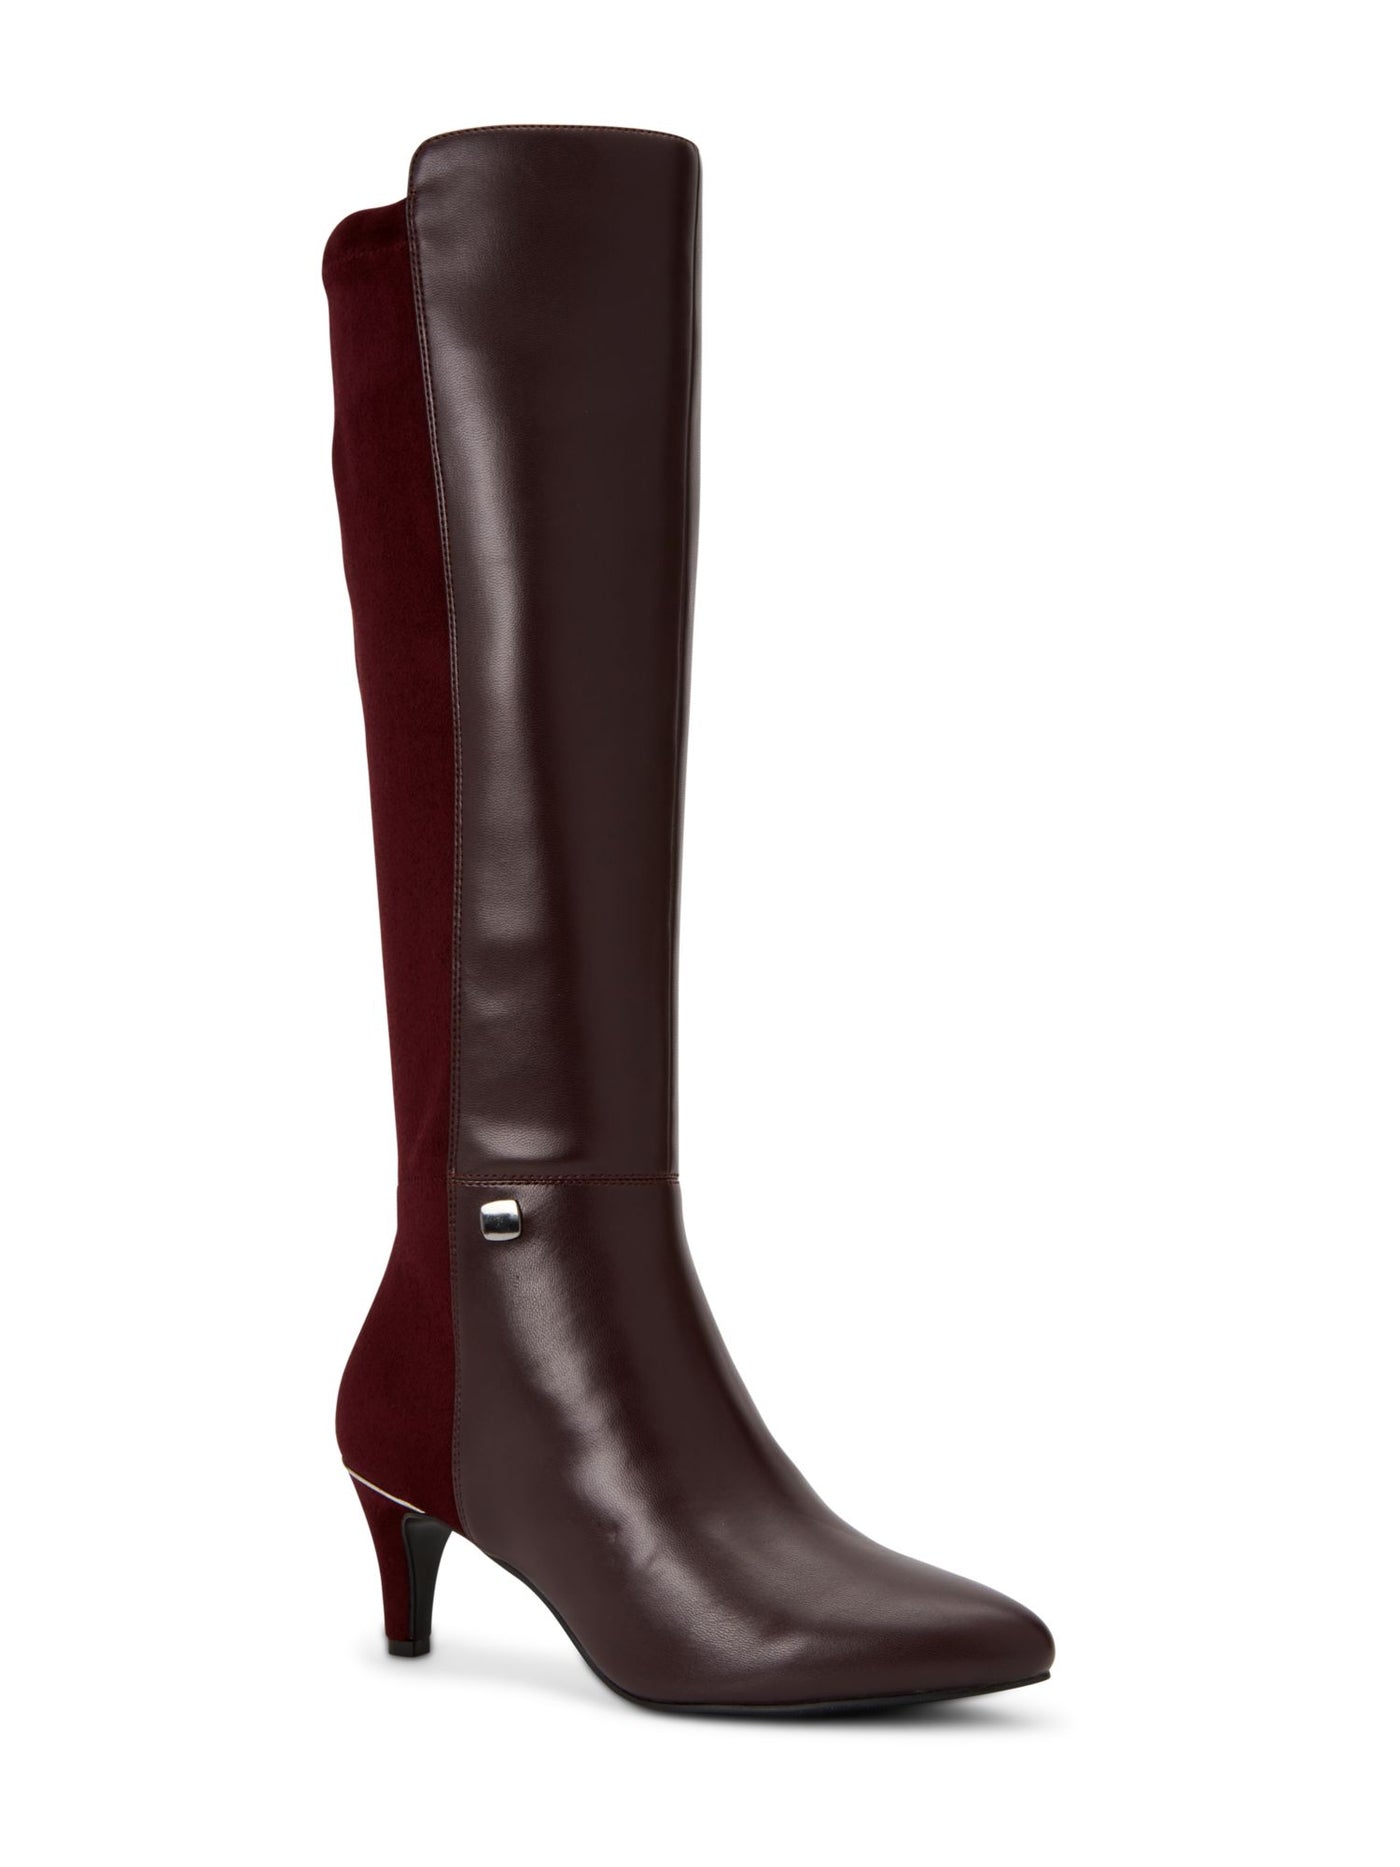 ALFANI Womens Burgundy Arch Support Cushioned Hakuu Almond Toe Kitten Heel Zip-Up Boots Shoes 10.5 M